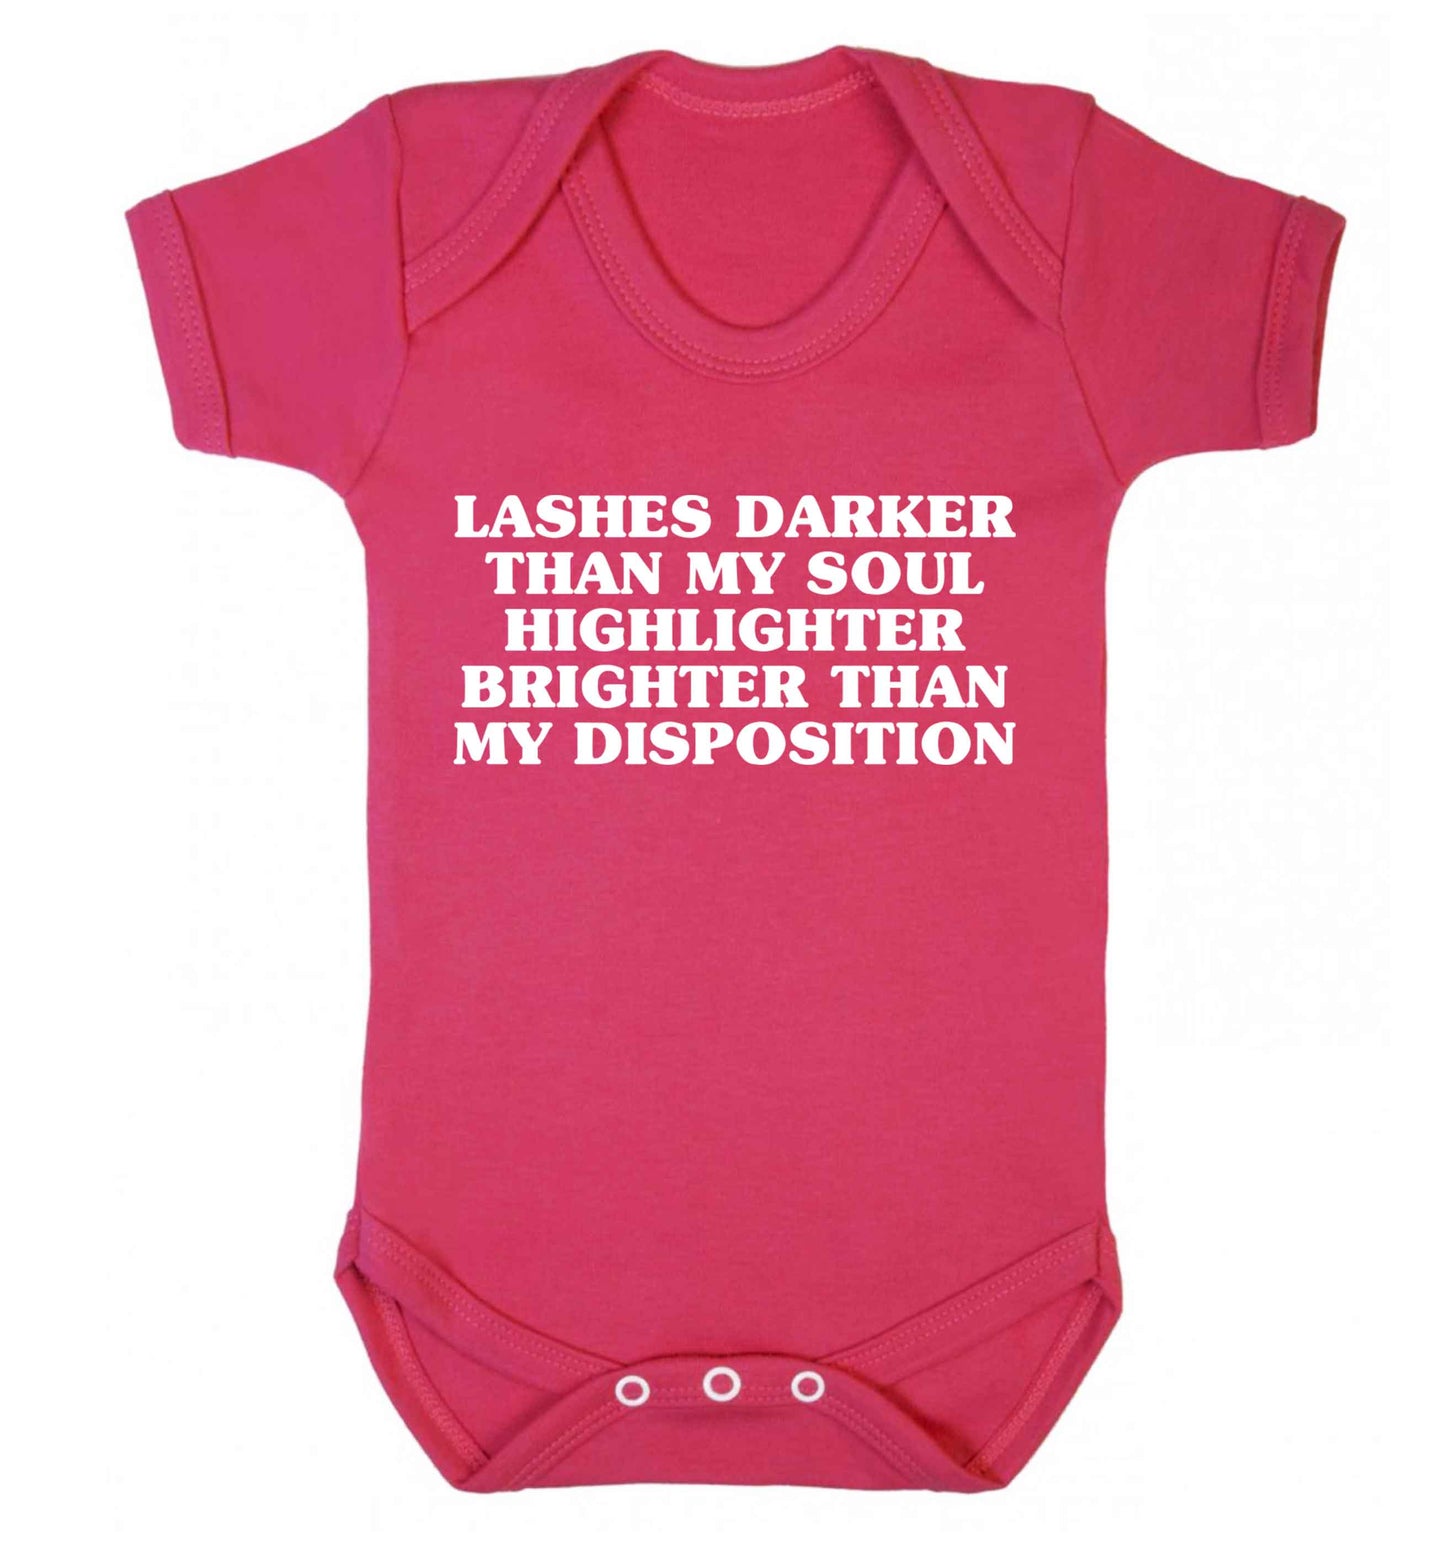 Lashes darker than my soul, highlighter brighter than my disposition Baby Vest dark pink 18-24 months